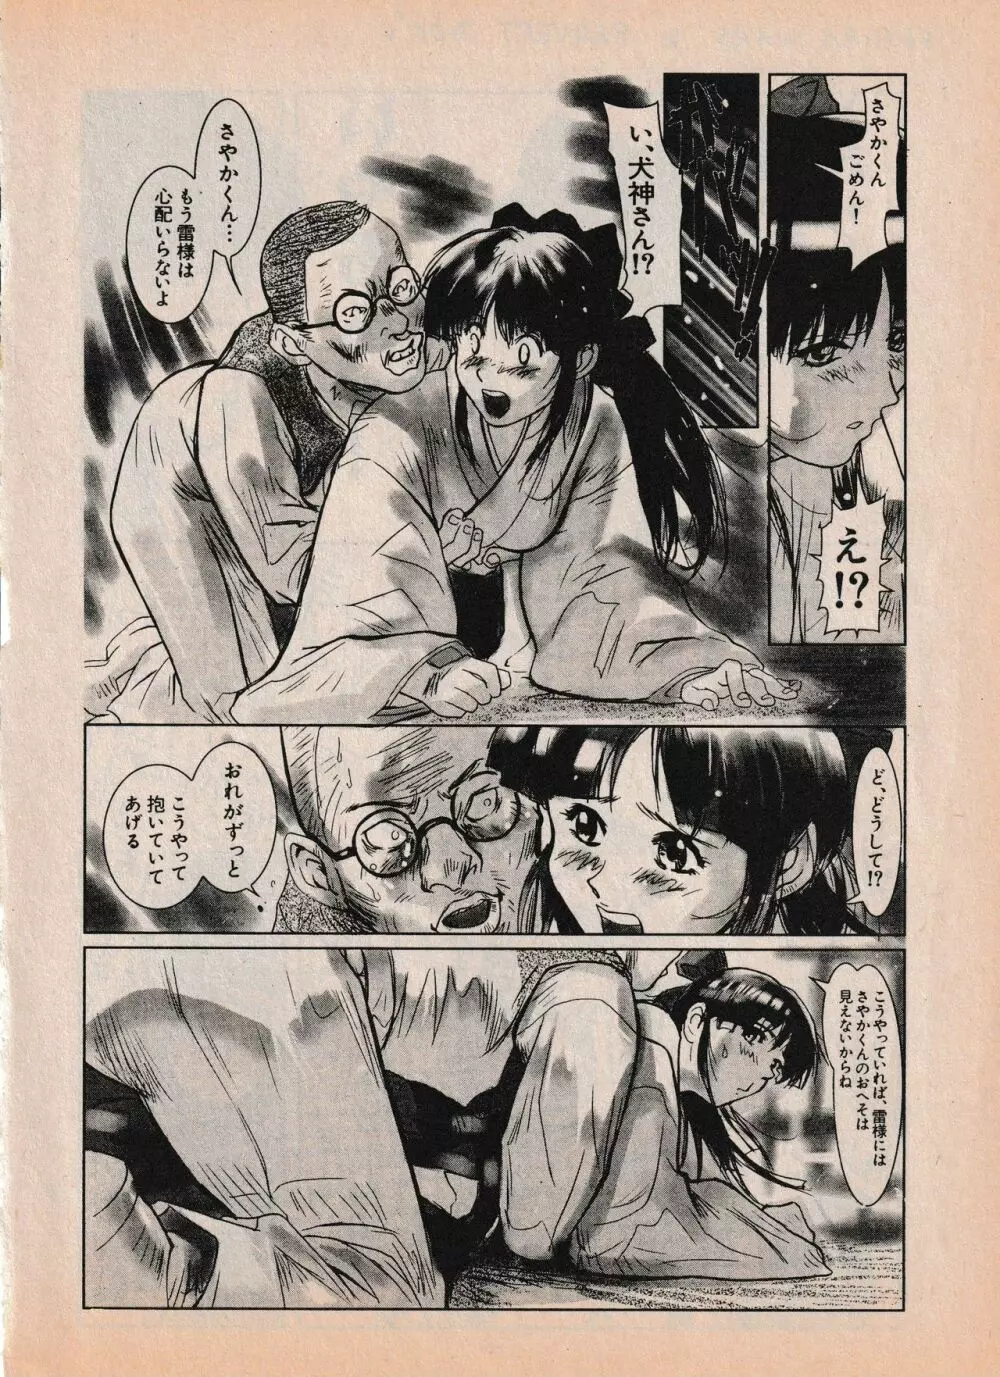 Sailor X vol. 4 - Sailor X vs. Cunty Horny! - page80